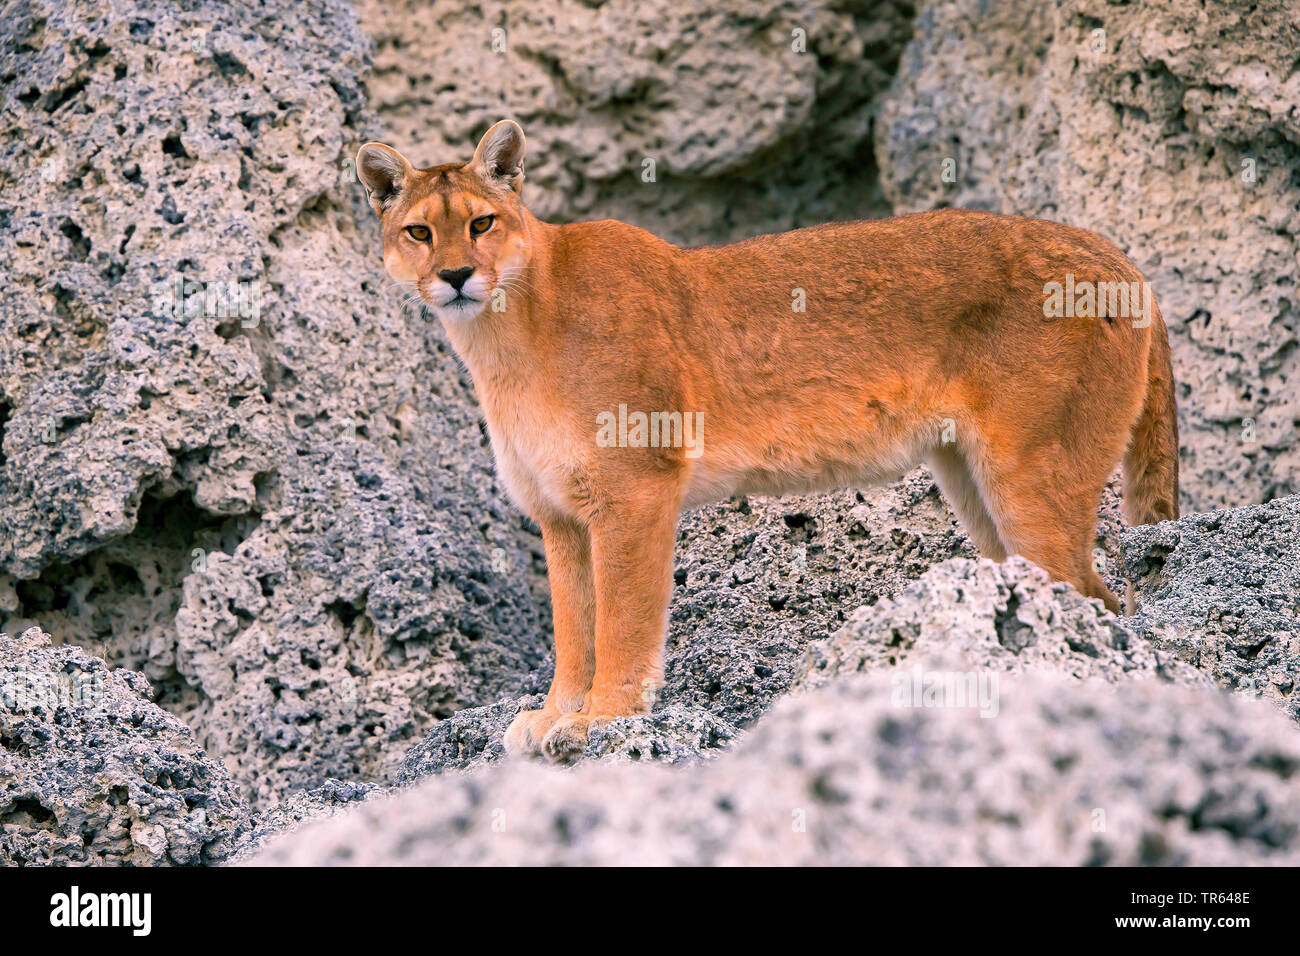 south american mountain lion